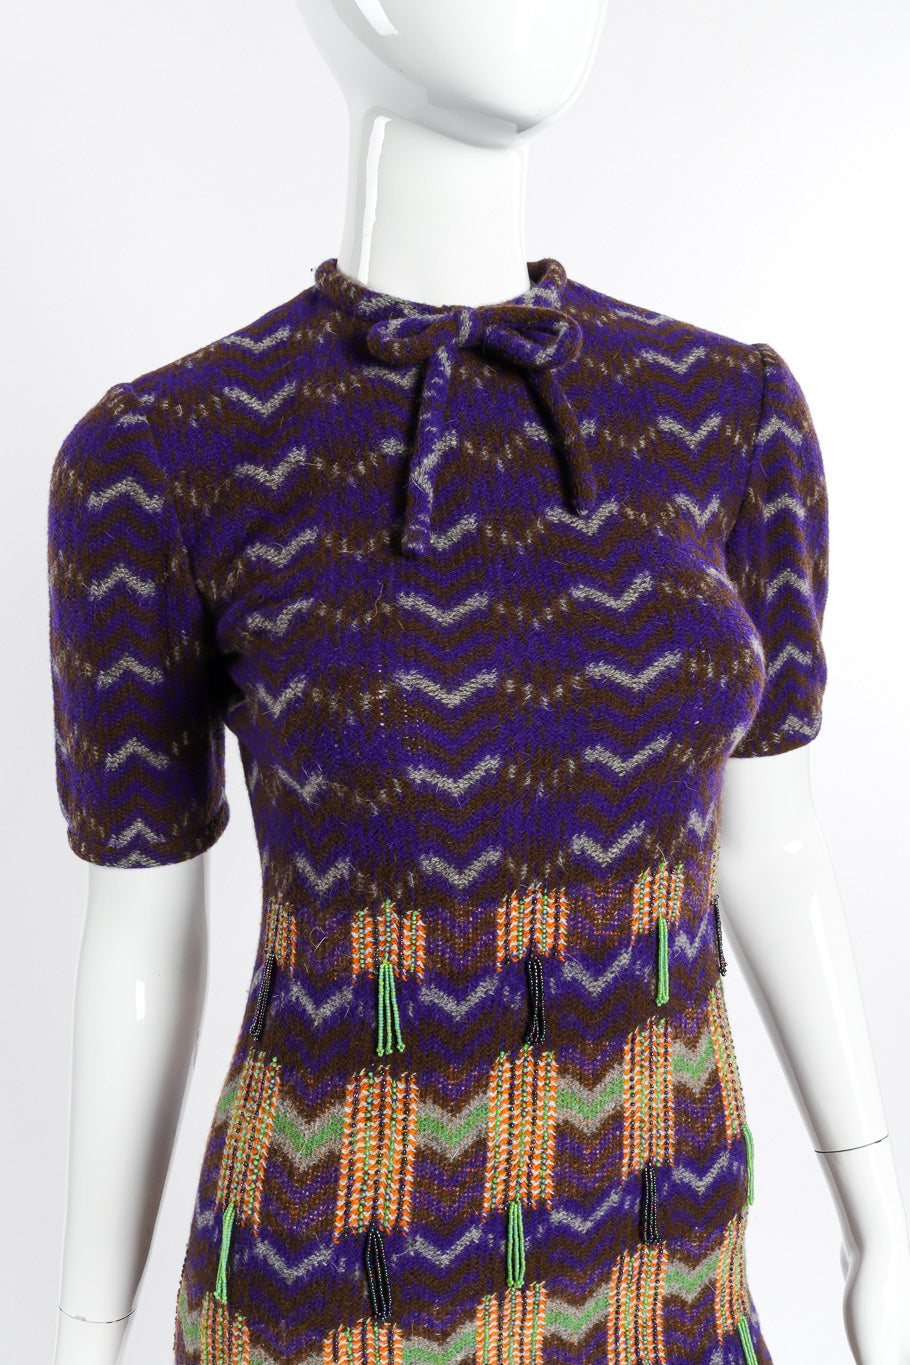 Vintage Richard Tam/Jon Mandl Chevron Knit Loop Dress front on mannequin closeup @recessla